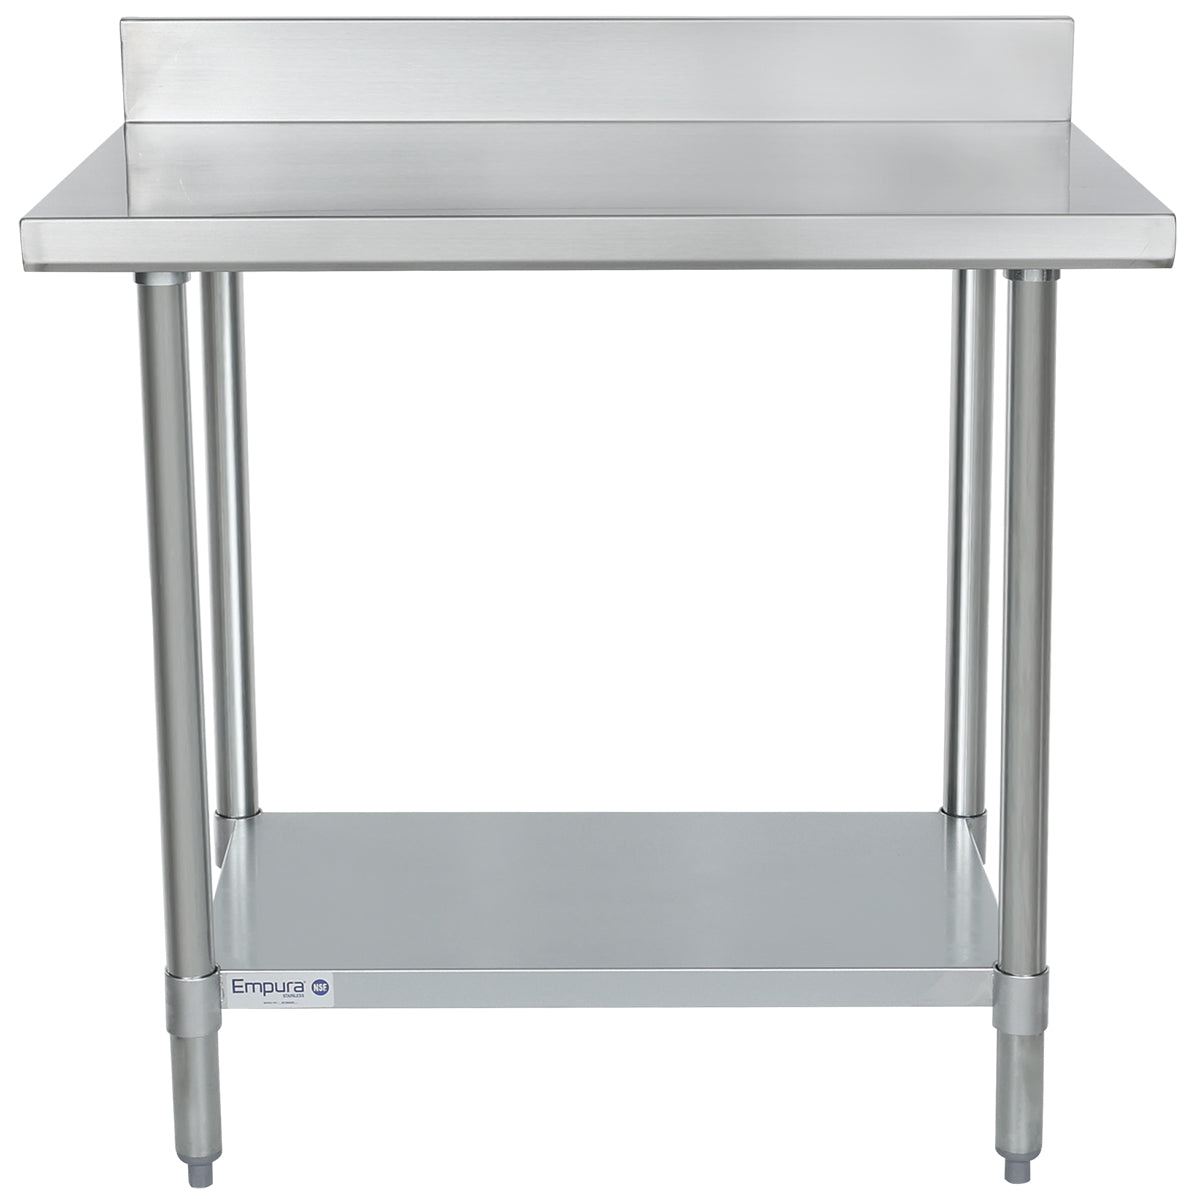 Empura 36" x 24" 18-Gauge 304 Stainless Steel Commercial Work Table with 4" Backsplash Galvanized Legs and Undershelf